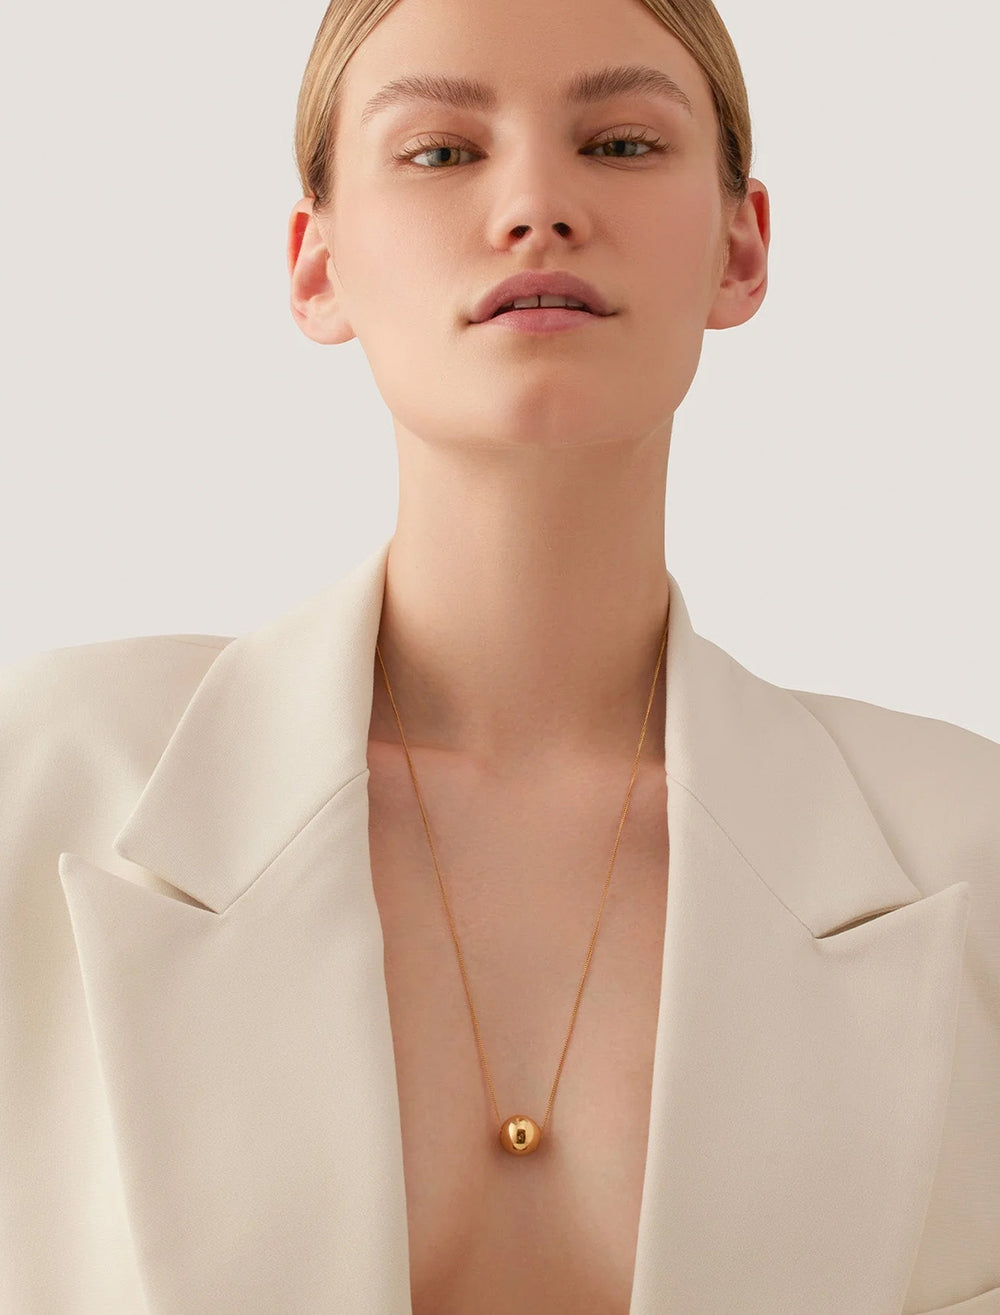 model wearing aurora pendant necklace